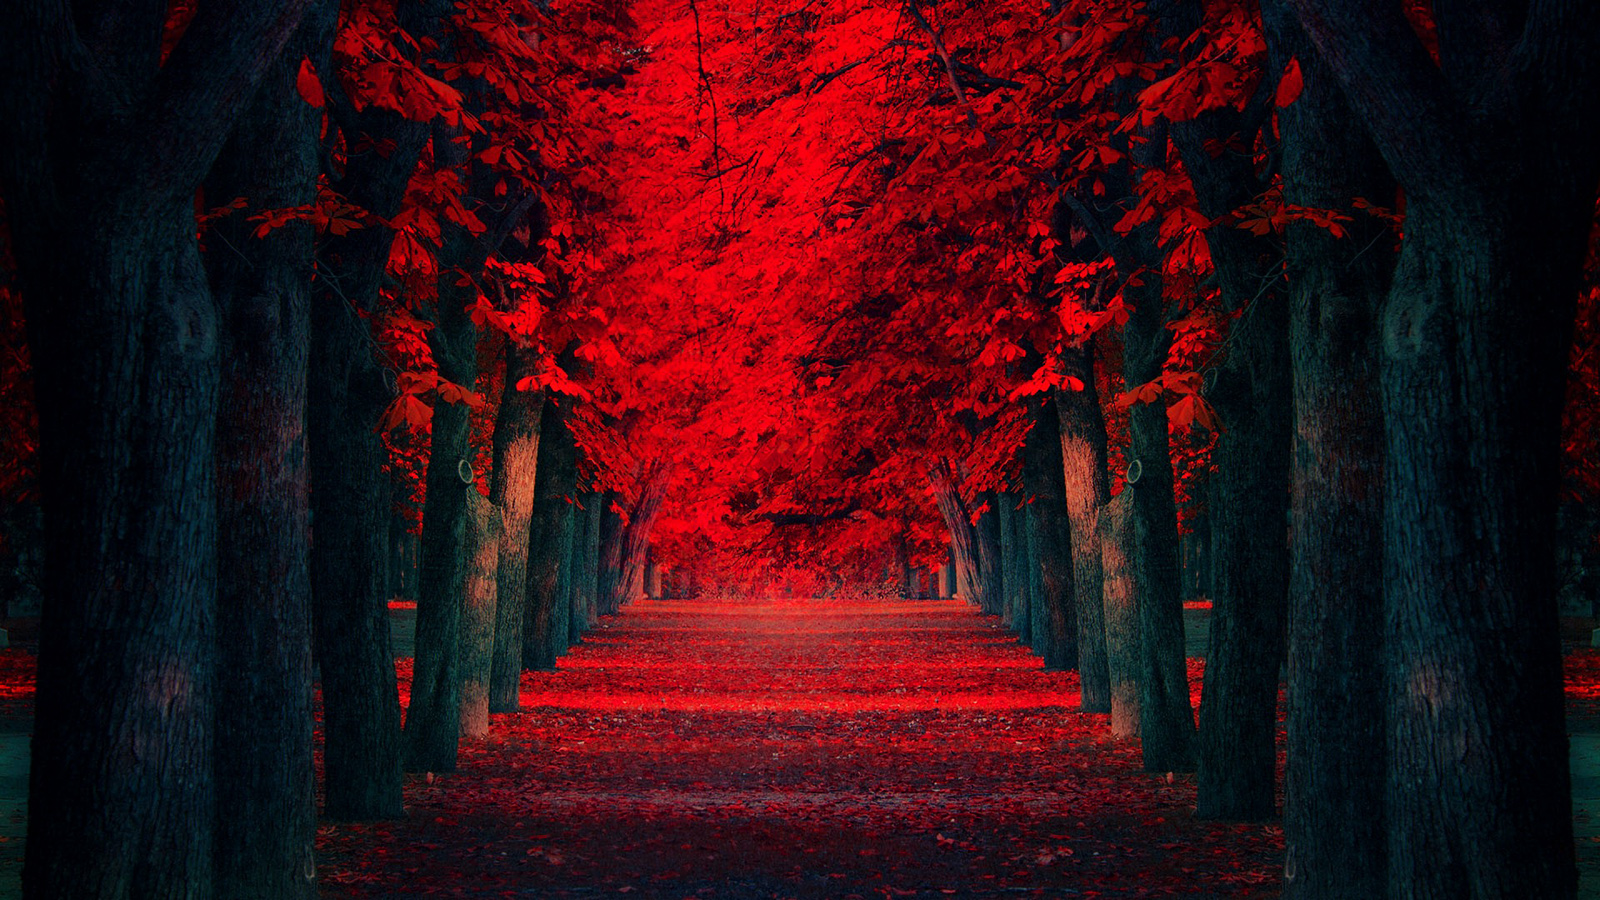 Black And Red Wallpaper Hd Pixelstalk
red Wallpapers - Red And Black Forest - HD Wallpaper 